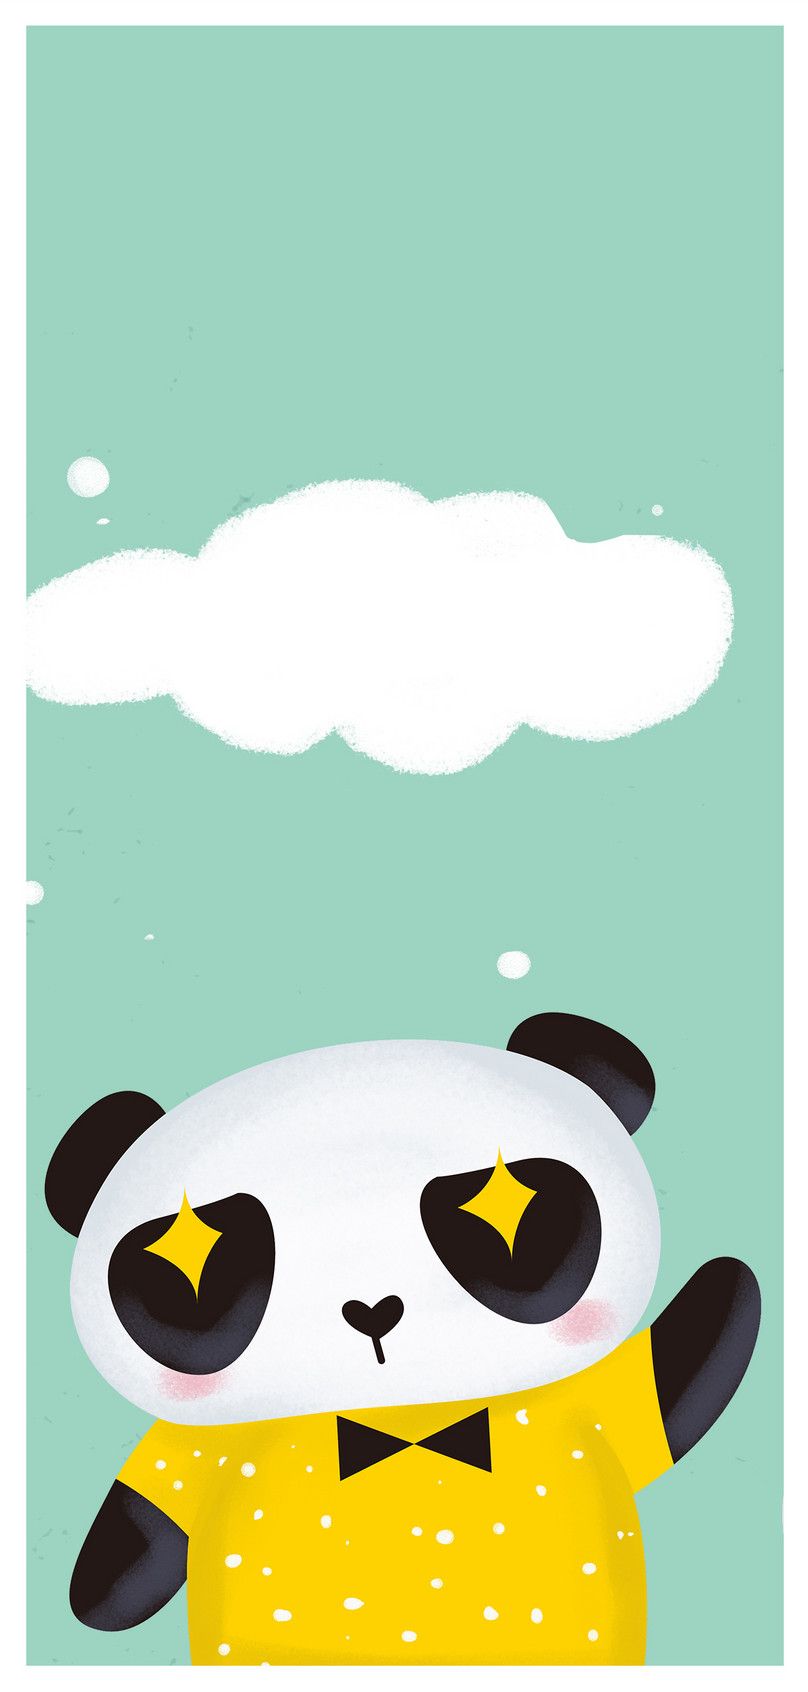 panda mobile phone wallpaper background image free download